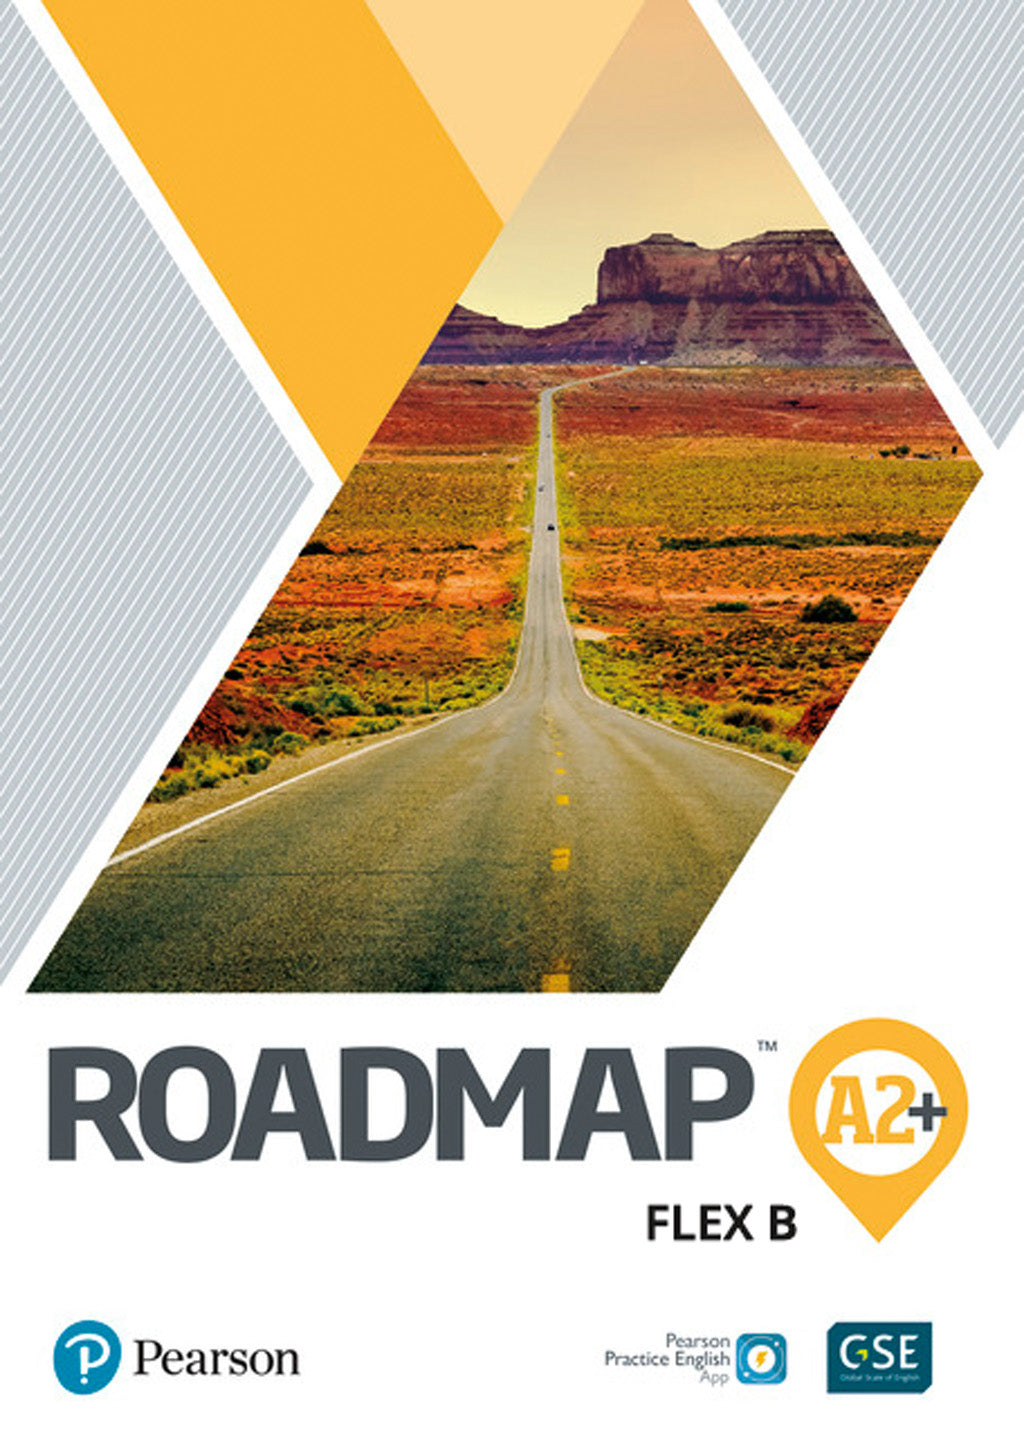 RoadMap A2+ Flex B eBook with Online Practice